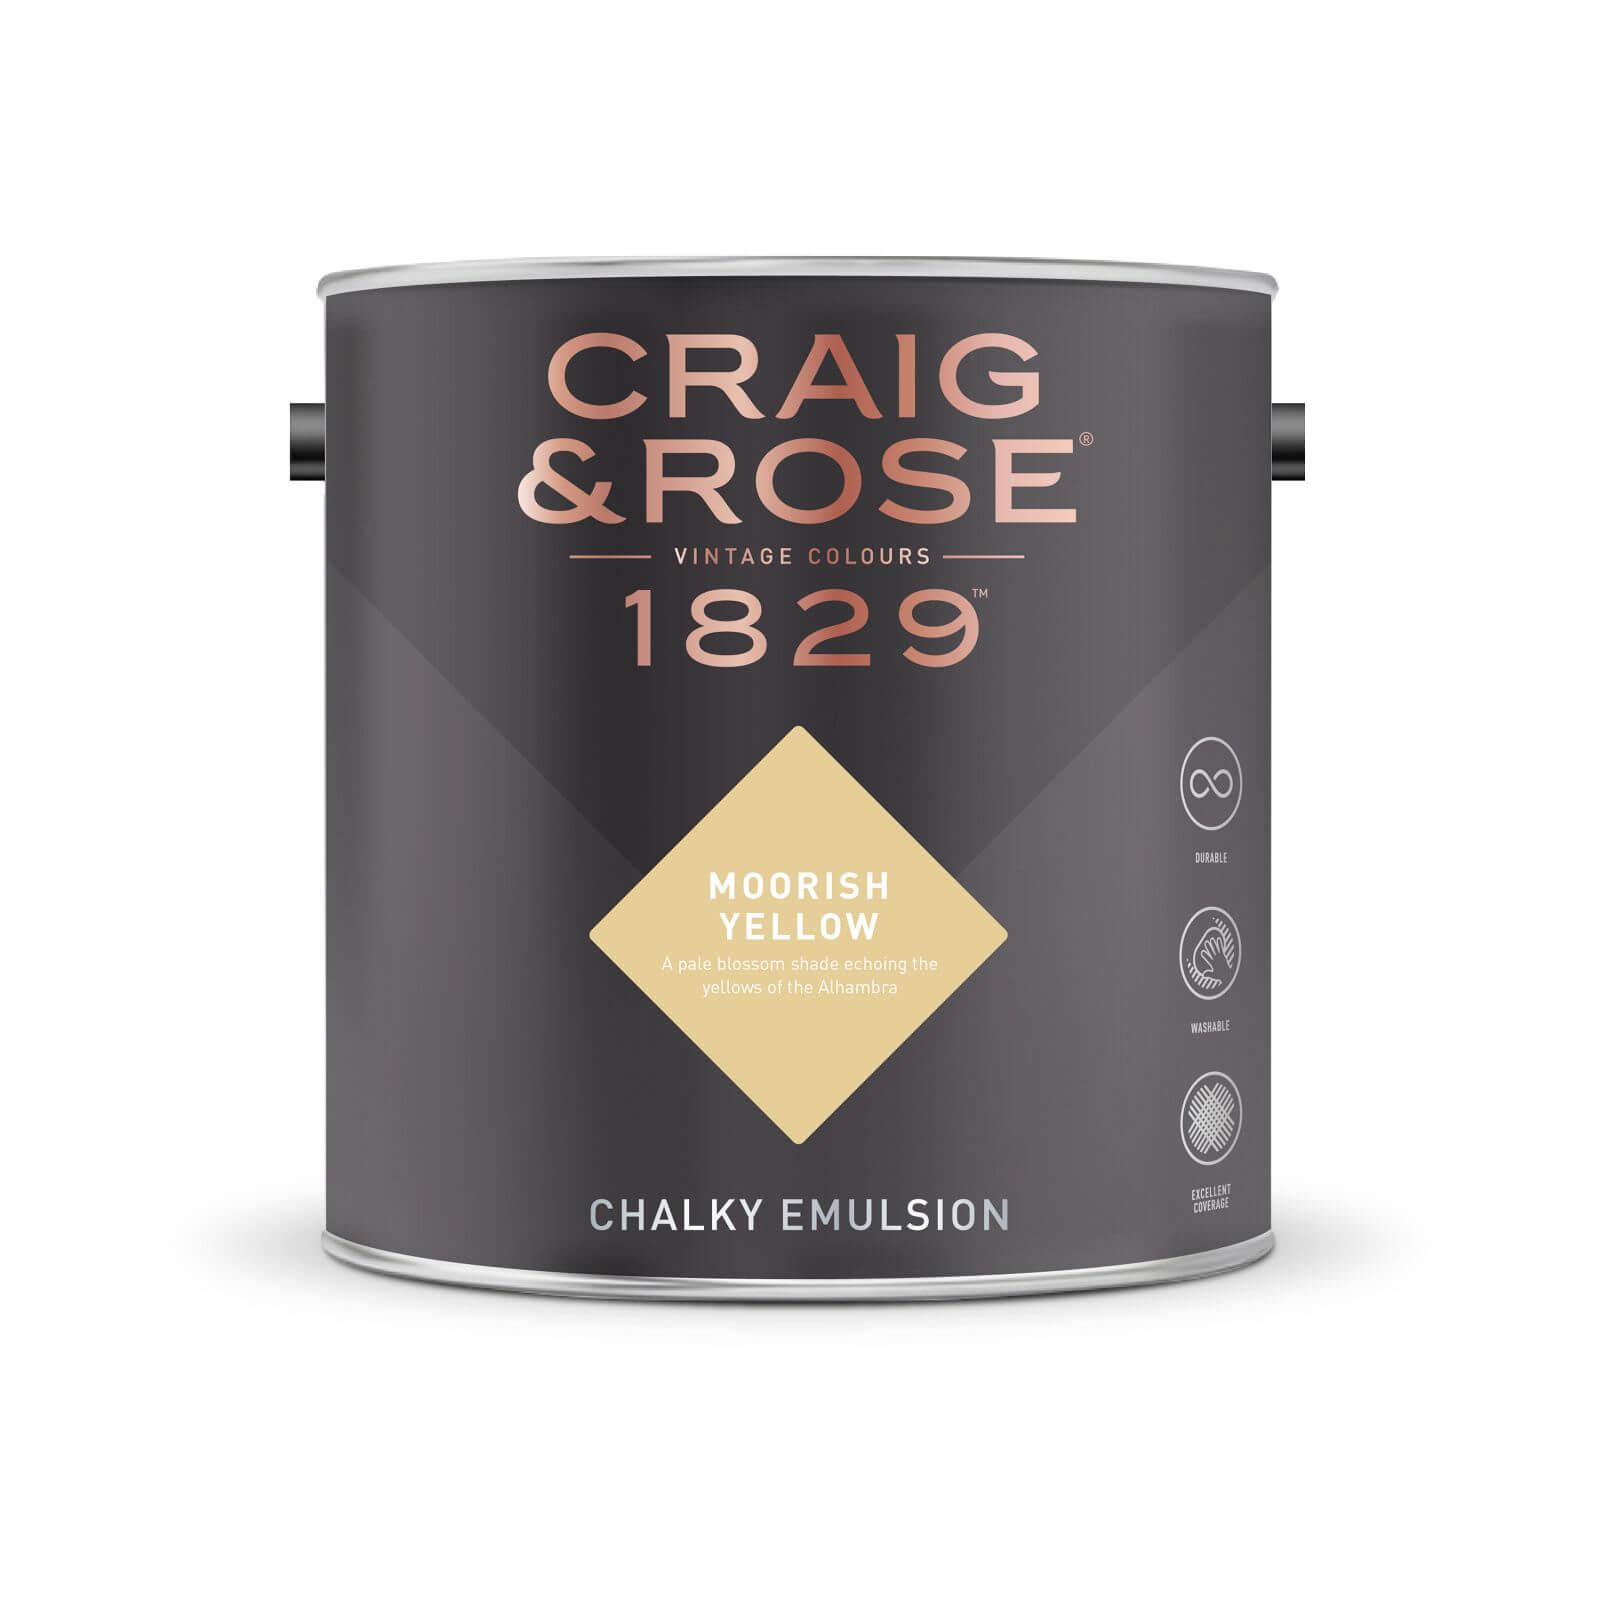 Craig & Rose 1829 Chalky Emulsion Paint Moorish Yellow - Tester 50ml